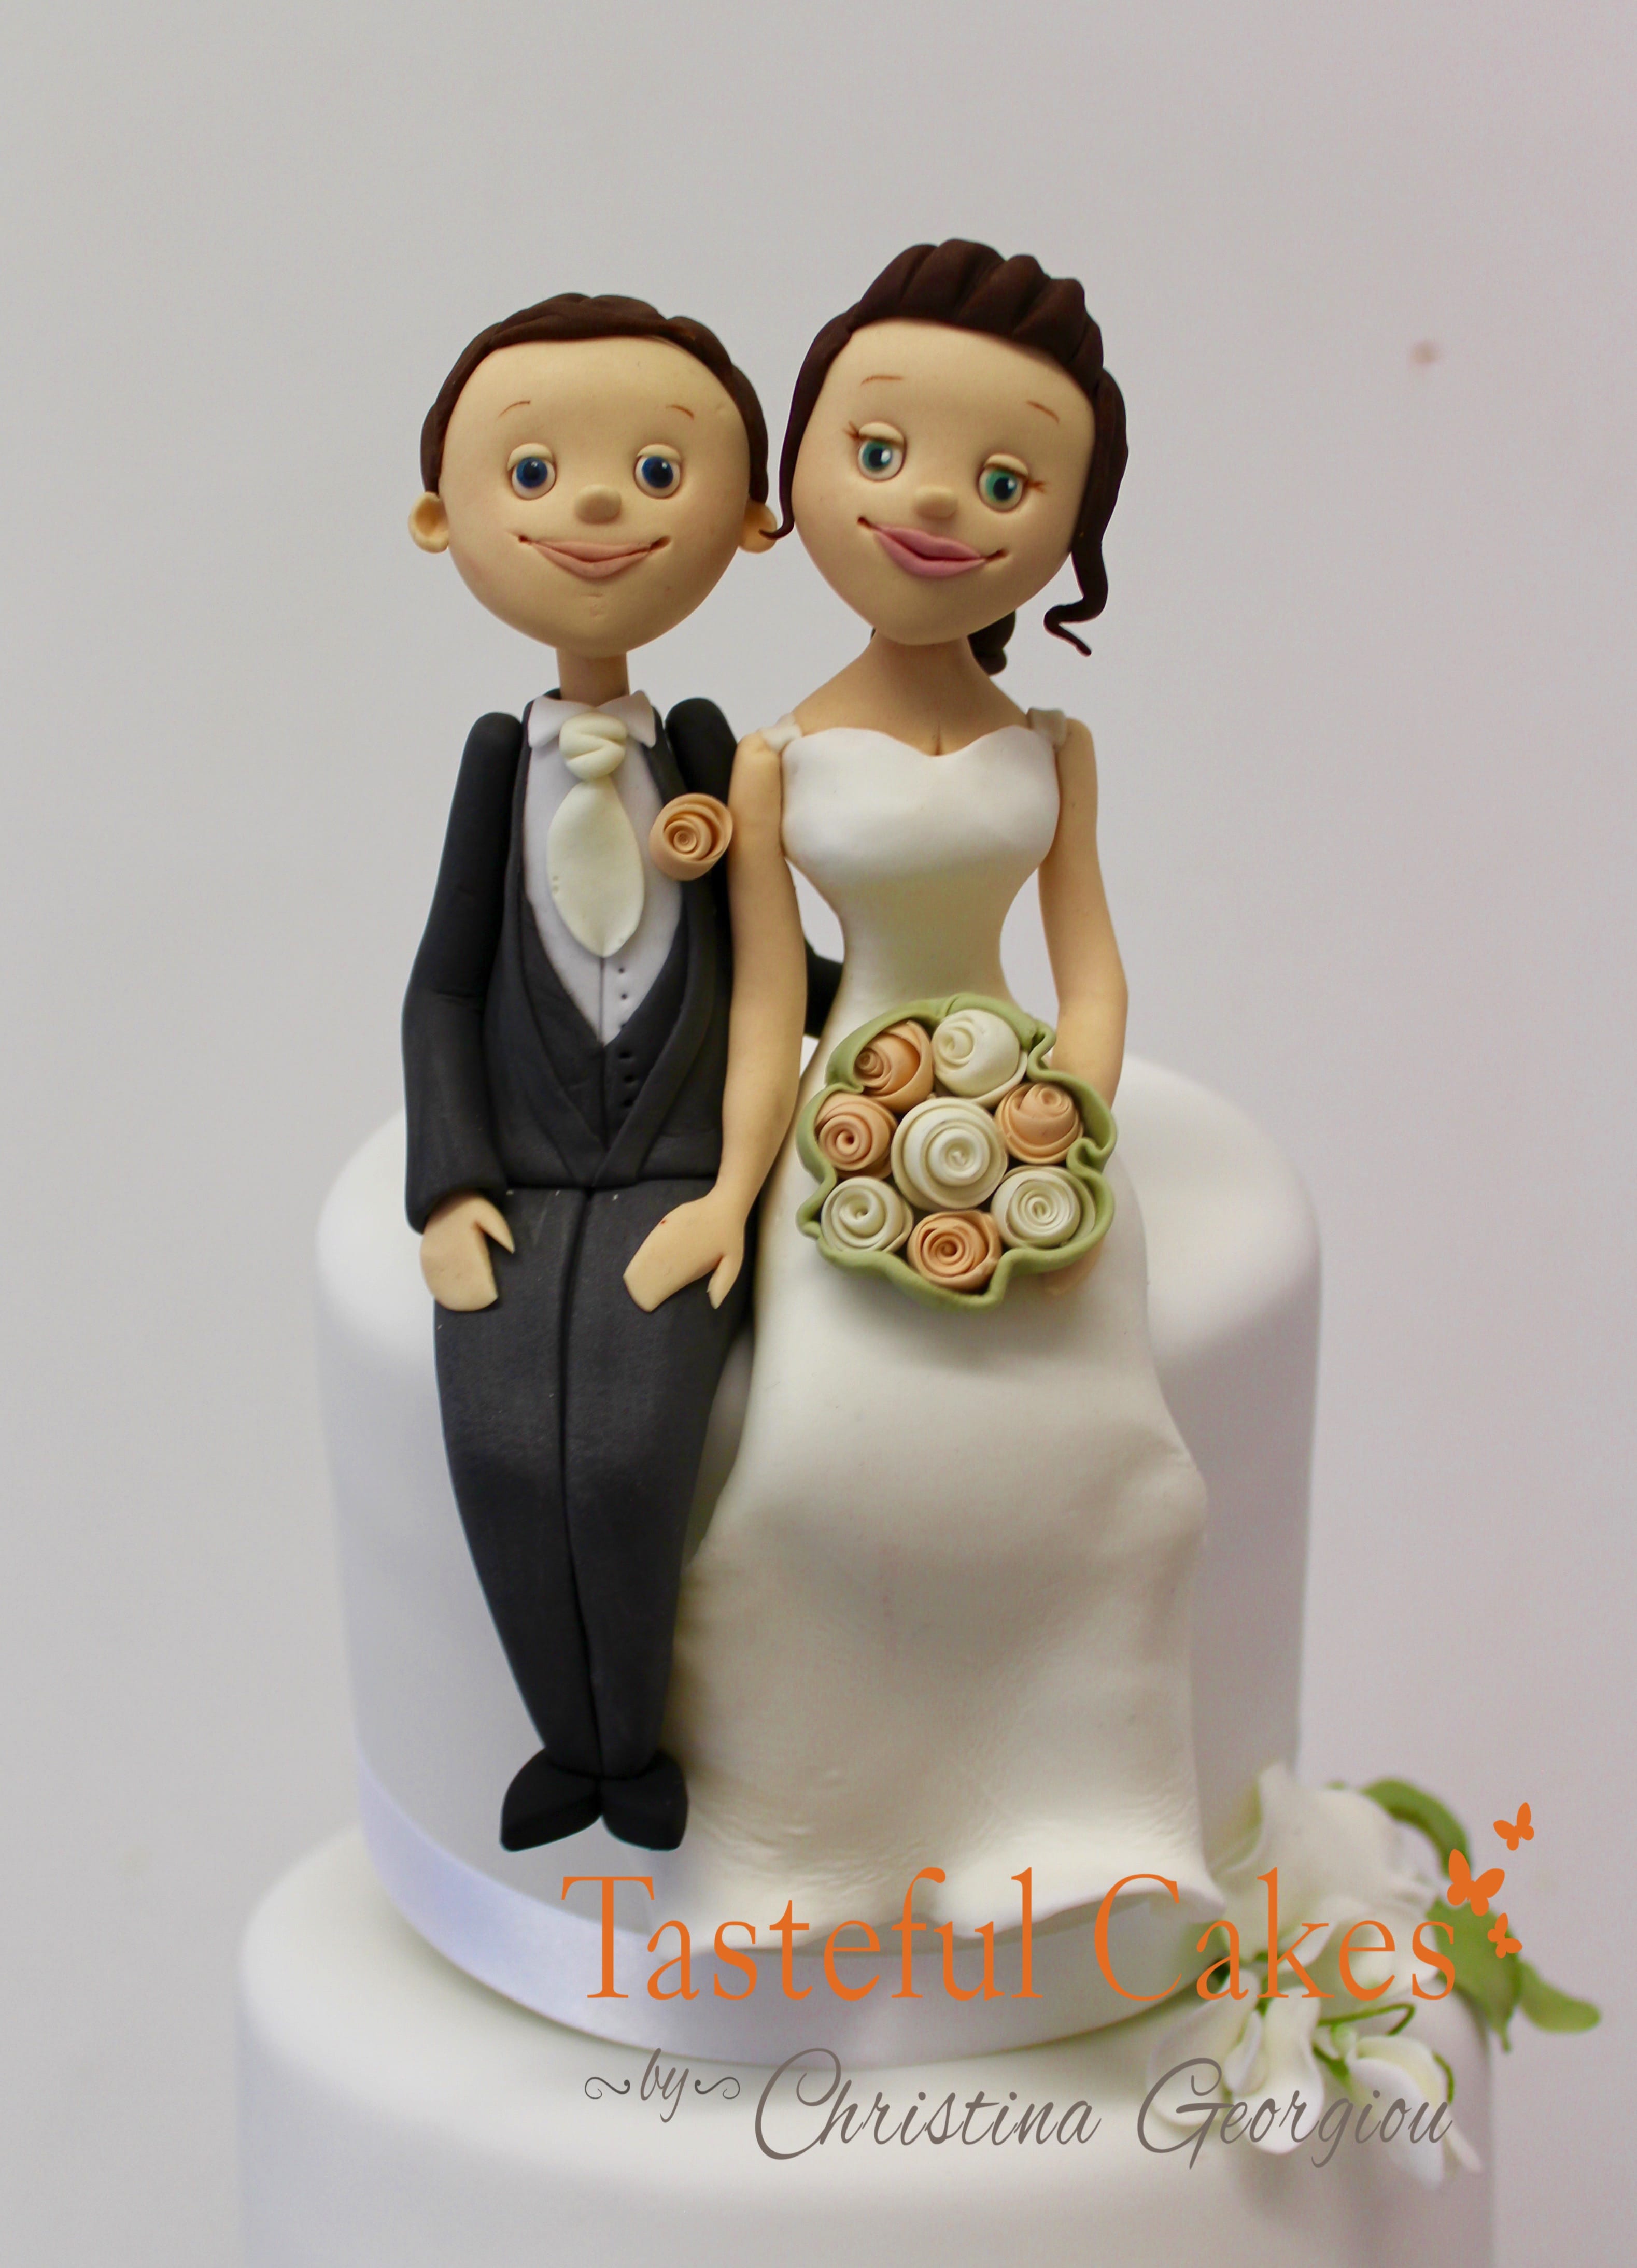 Happy Bride and Groom – Wedding Cake Topper - Tasteful Cakes By Christina Georgiou